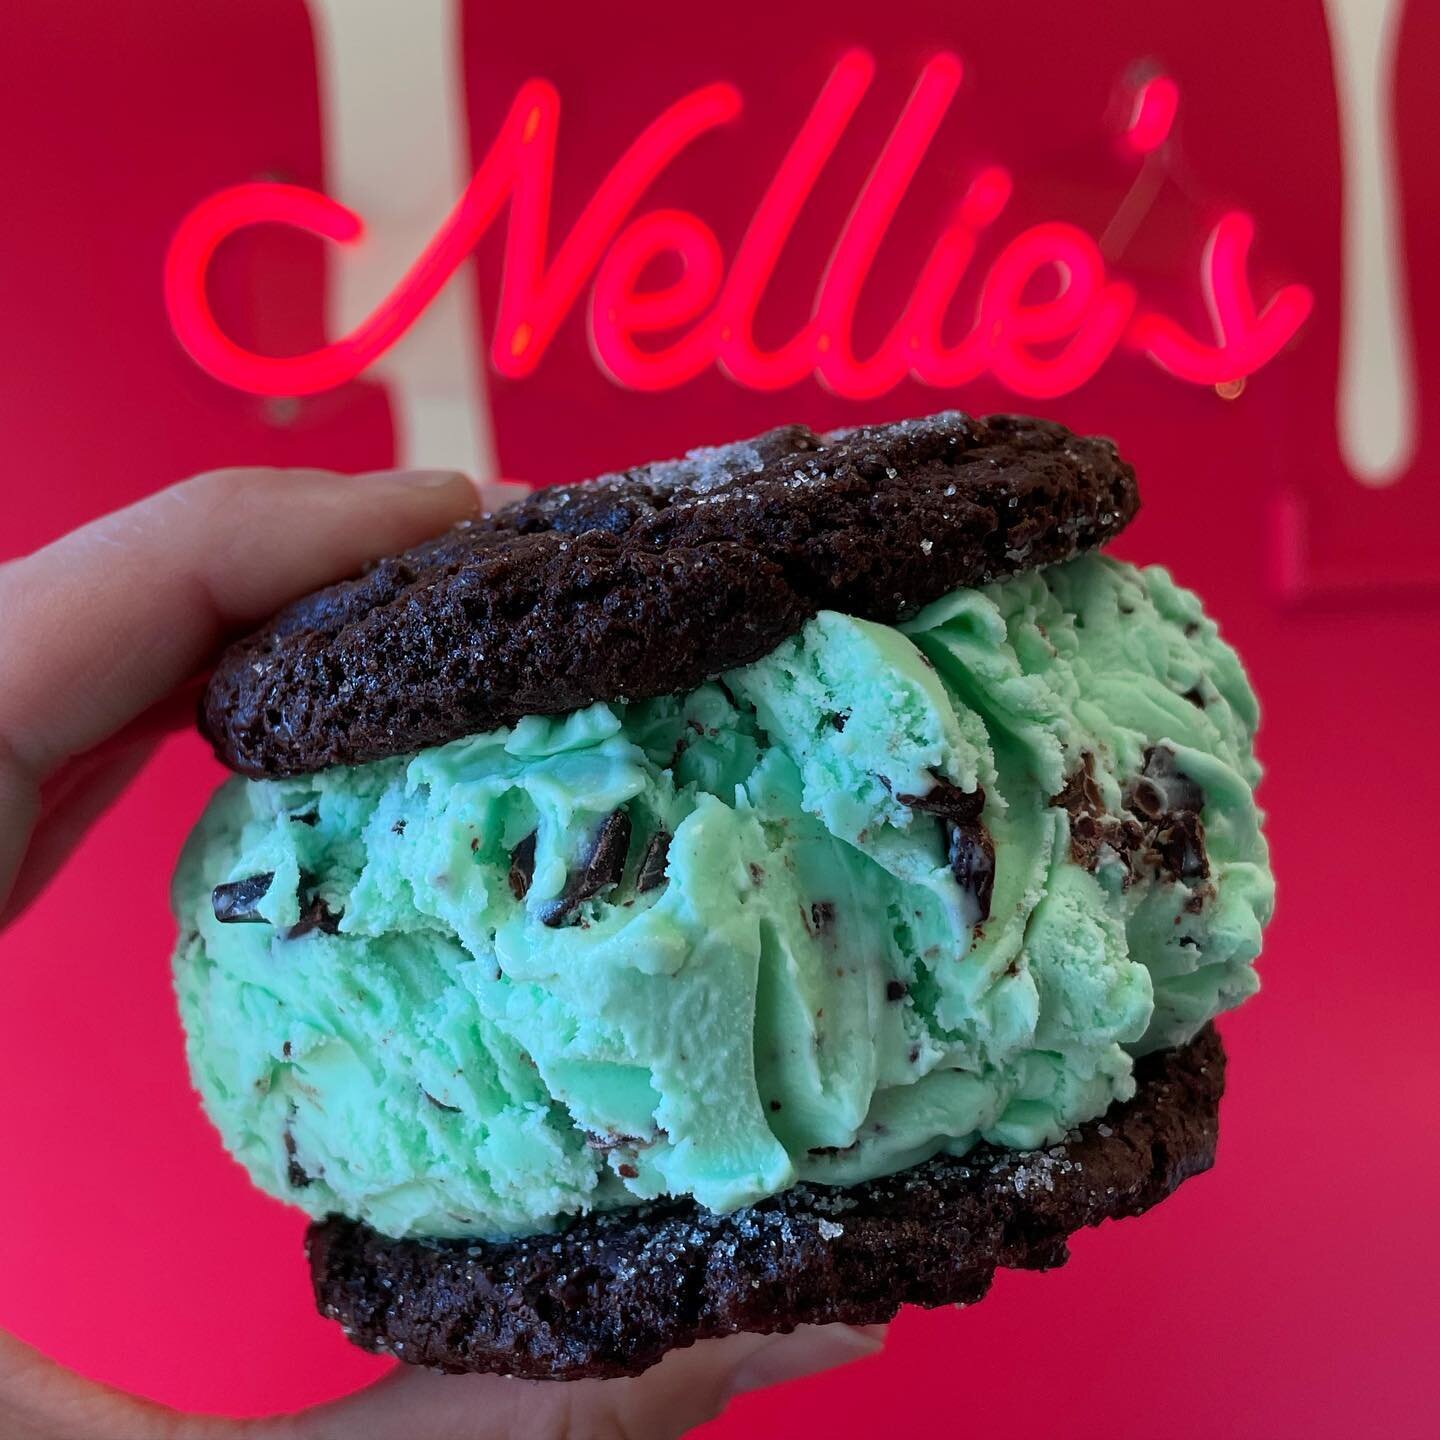 Beat the heat 🥵 with a @nelliesicecream scoop! 🍦#icecreamcookiesandwich #nelliesicecream